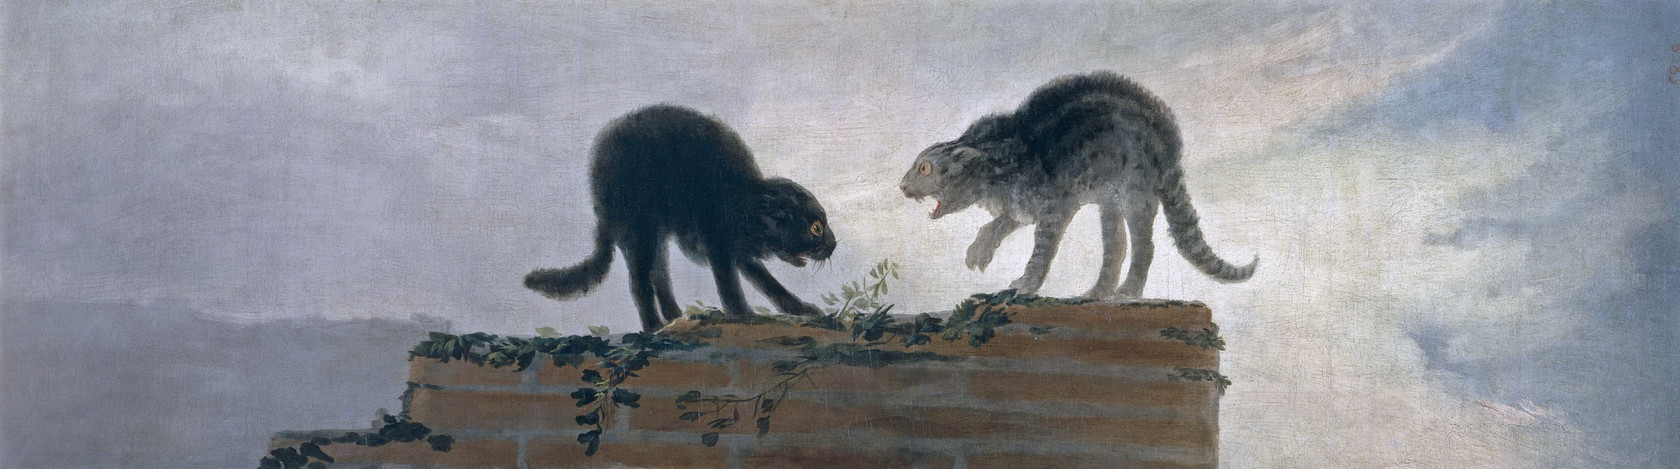 Картина - Драка котов, 1786 - Музей Прадо